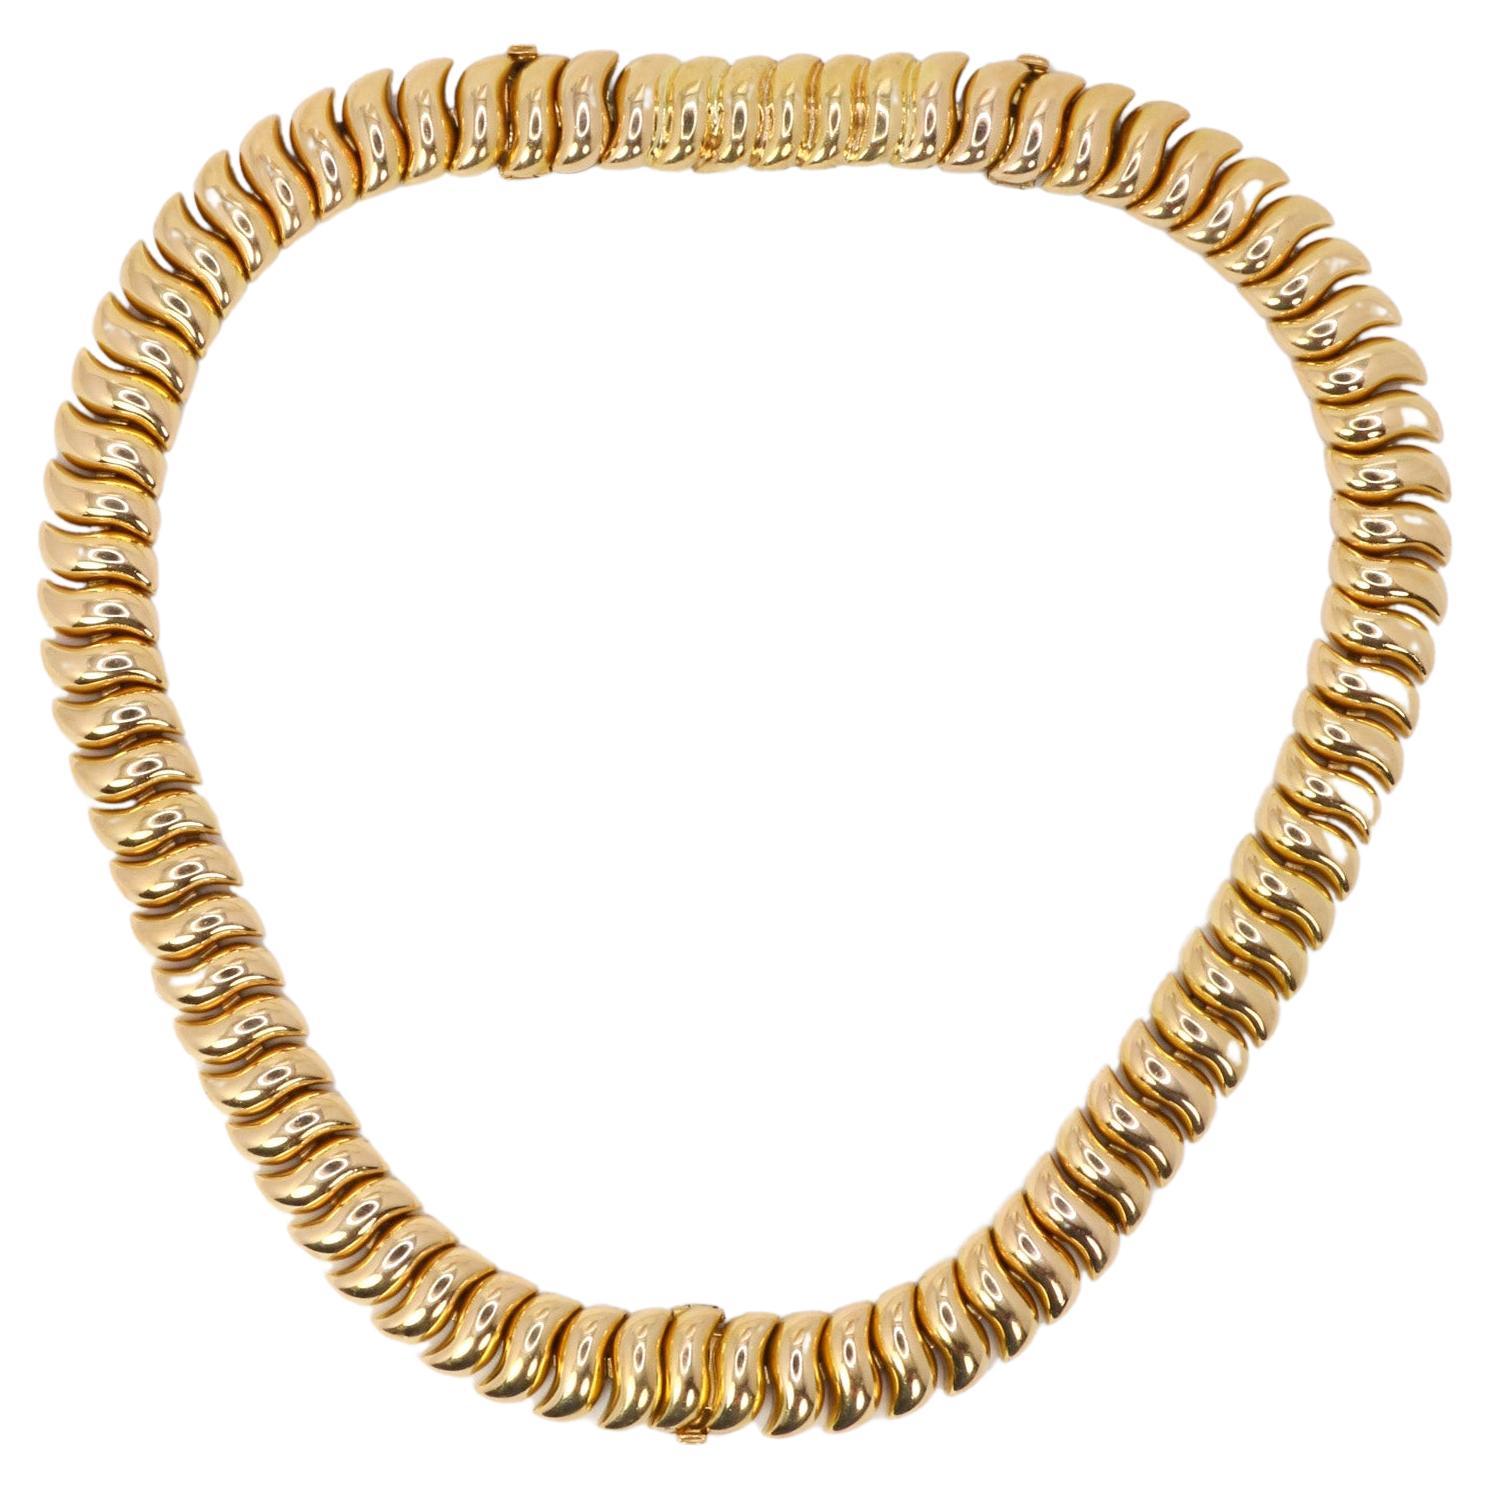 BOUCHERON Necklace Bracelet "Ondule" in yellow gold, 1940's